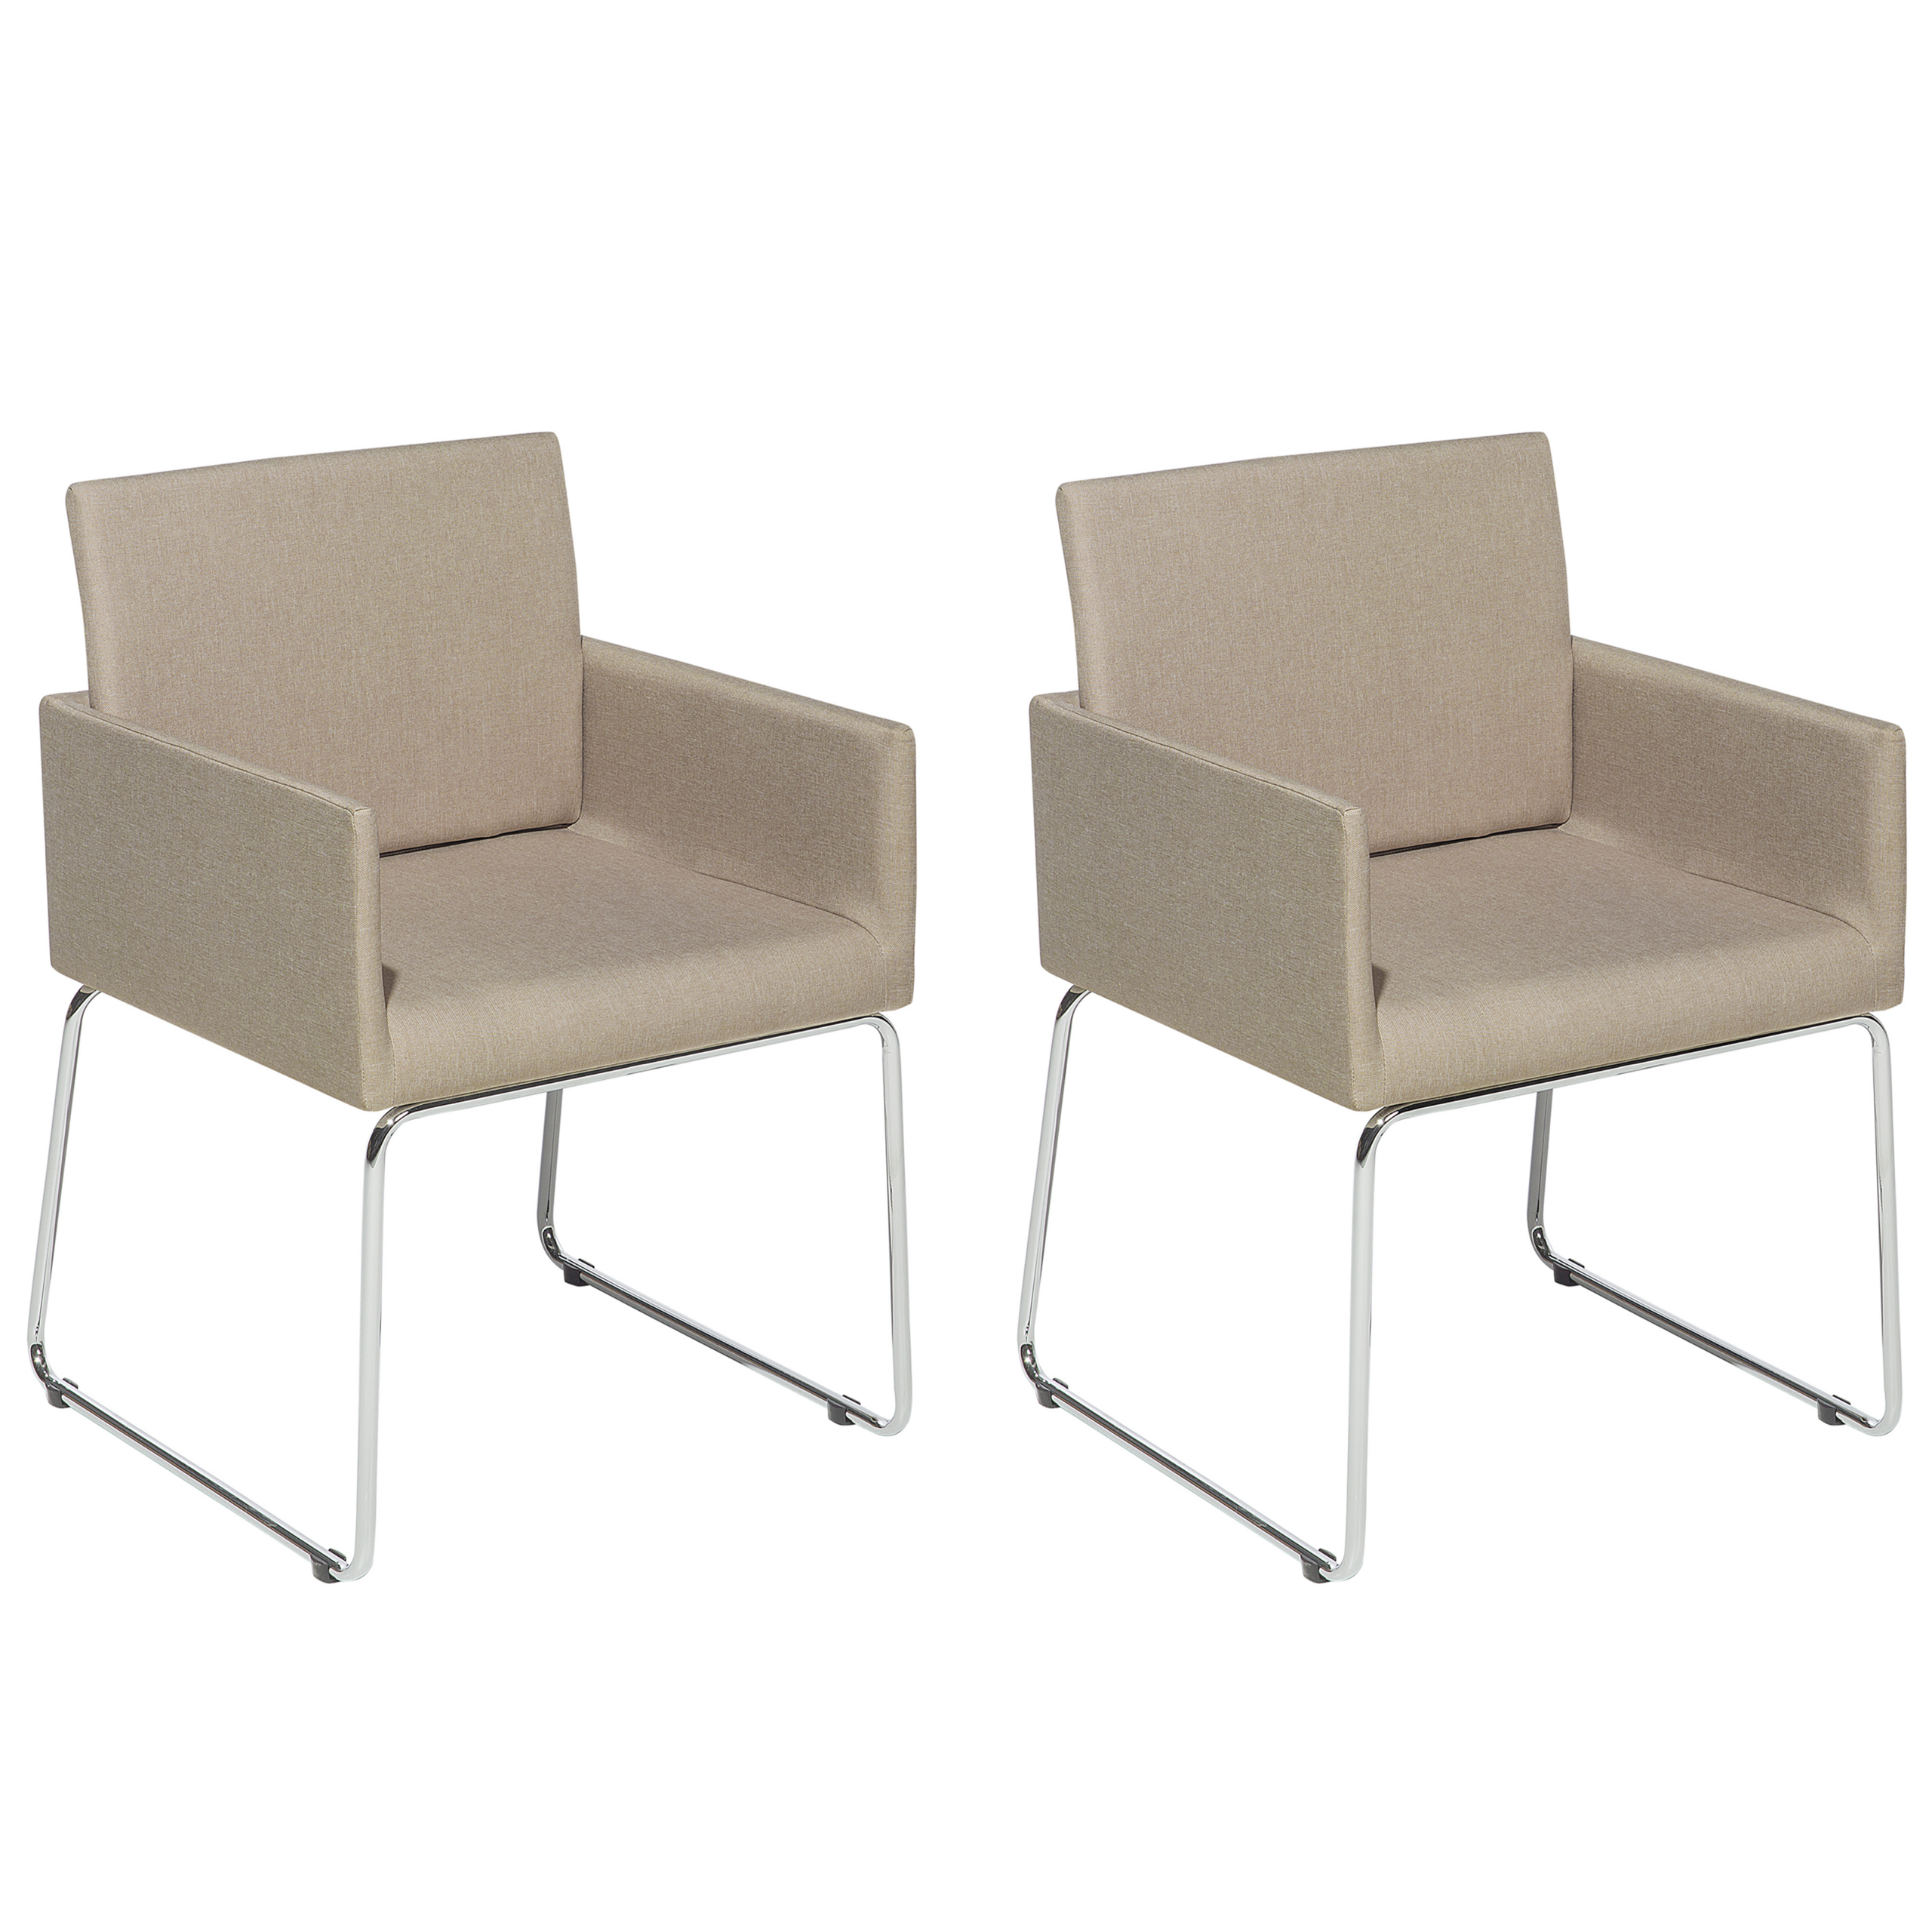 Beliani Set of 2 Dining Chairs Beige Fabric Chromed Metal Legs Modern